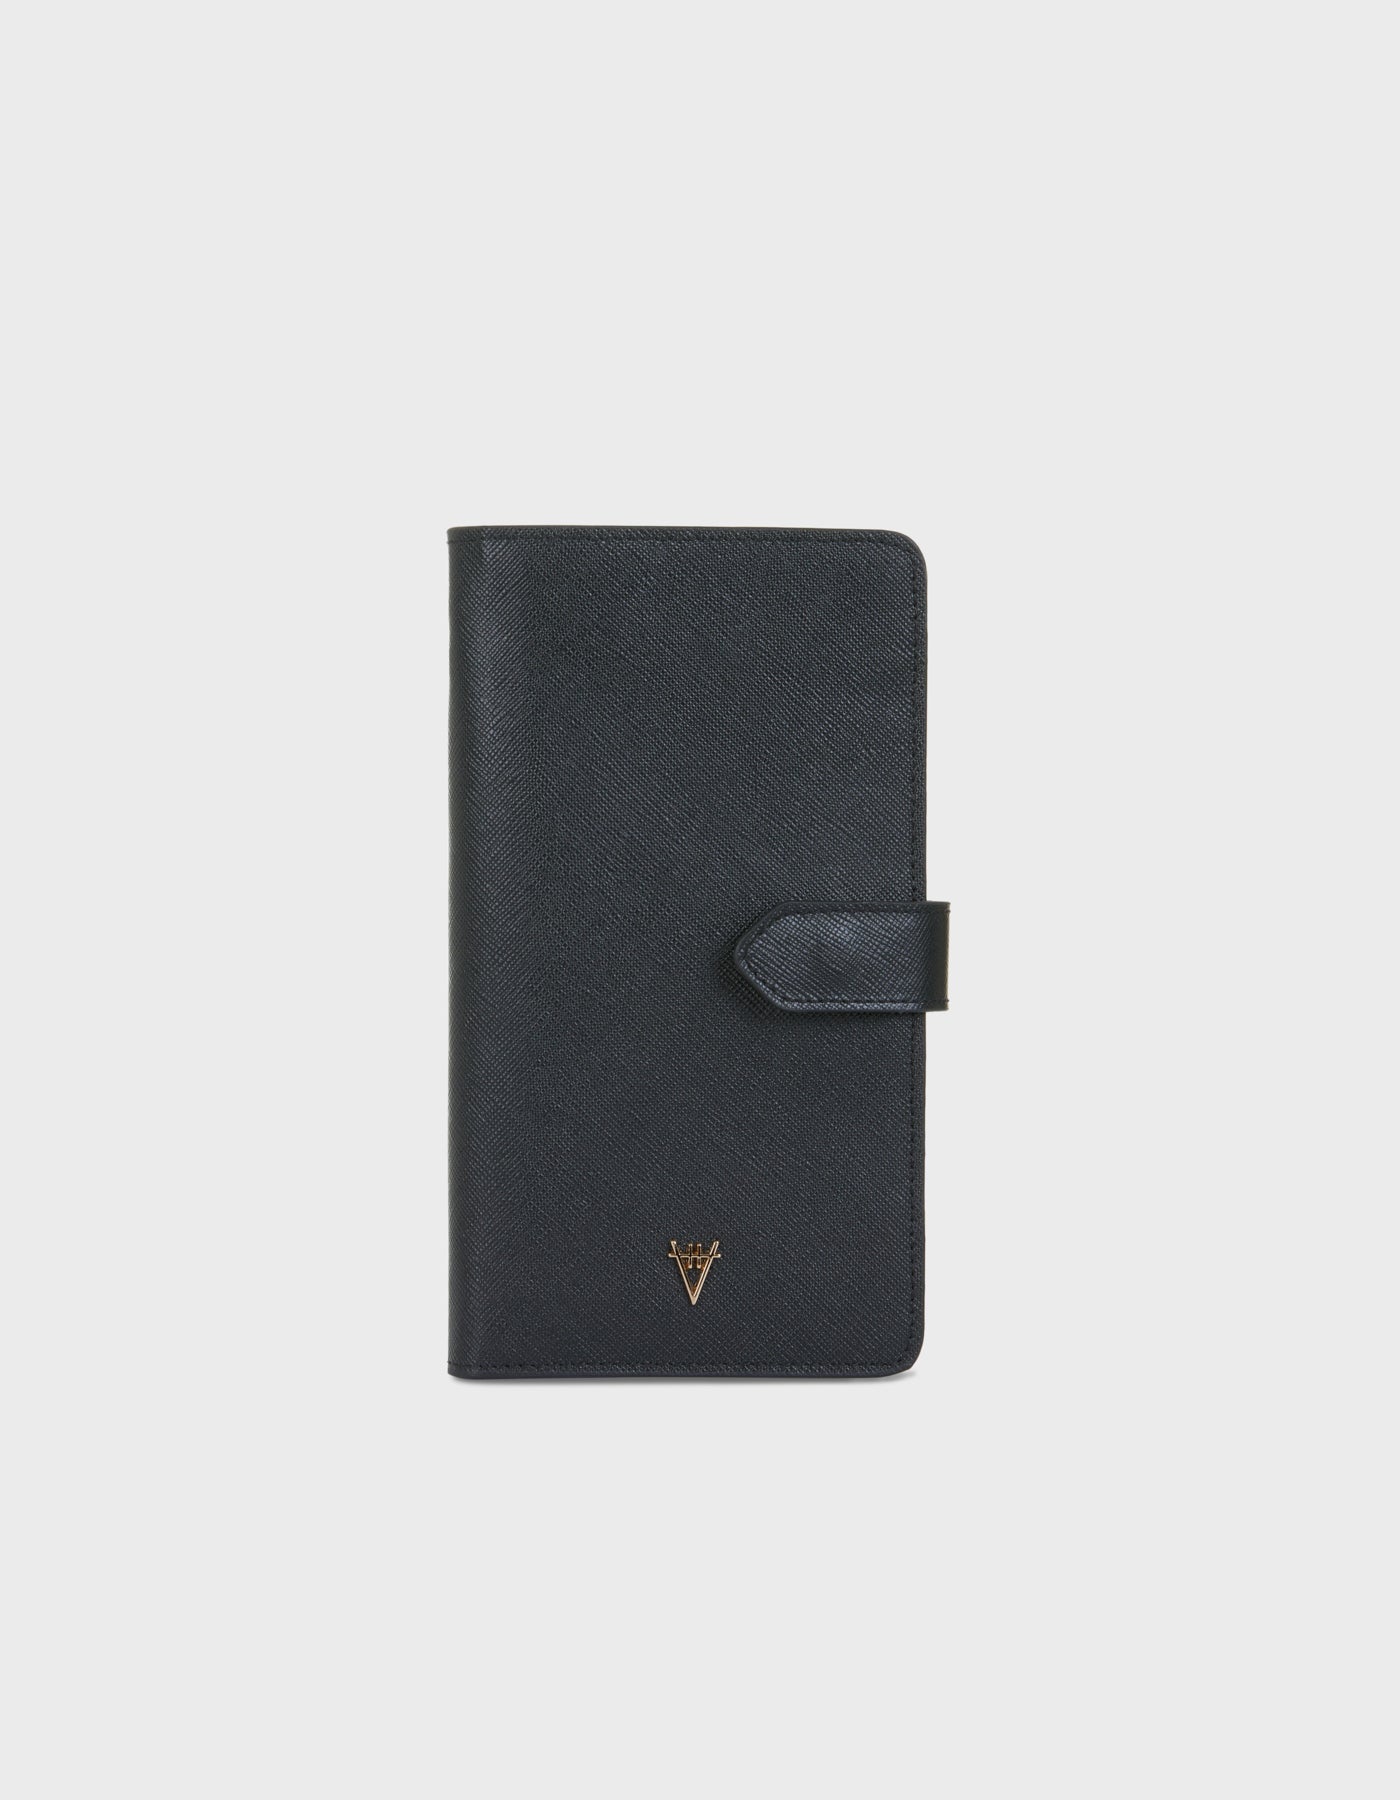 HiVa Atelier - Ita Crossbody Bag and Wallet Black